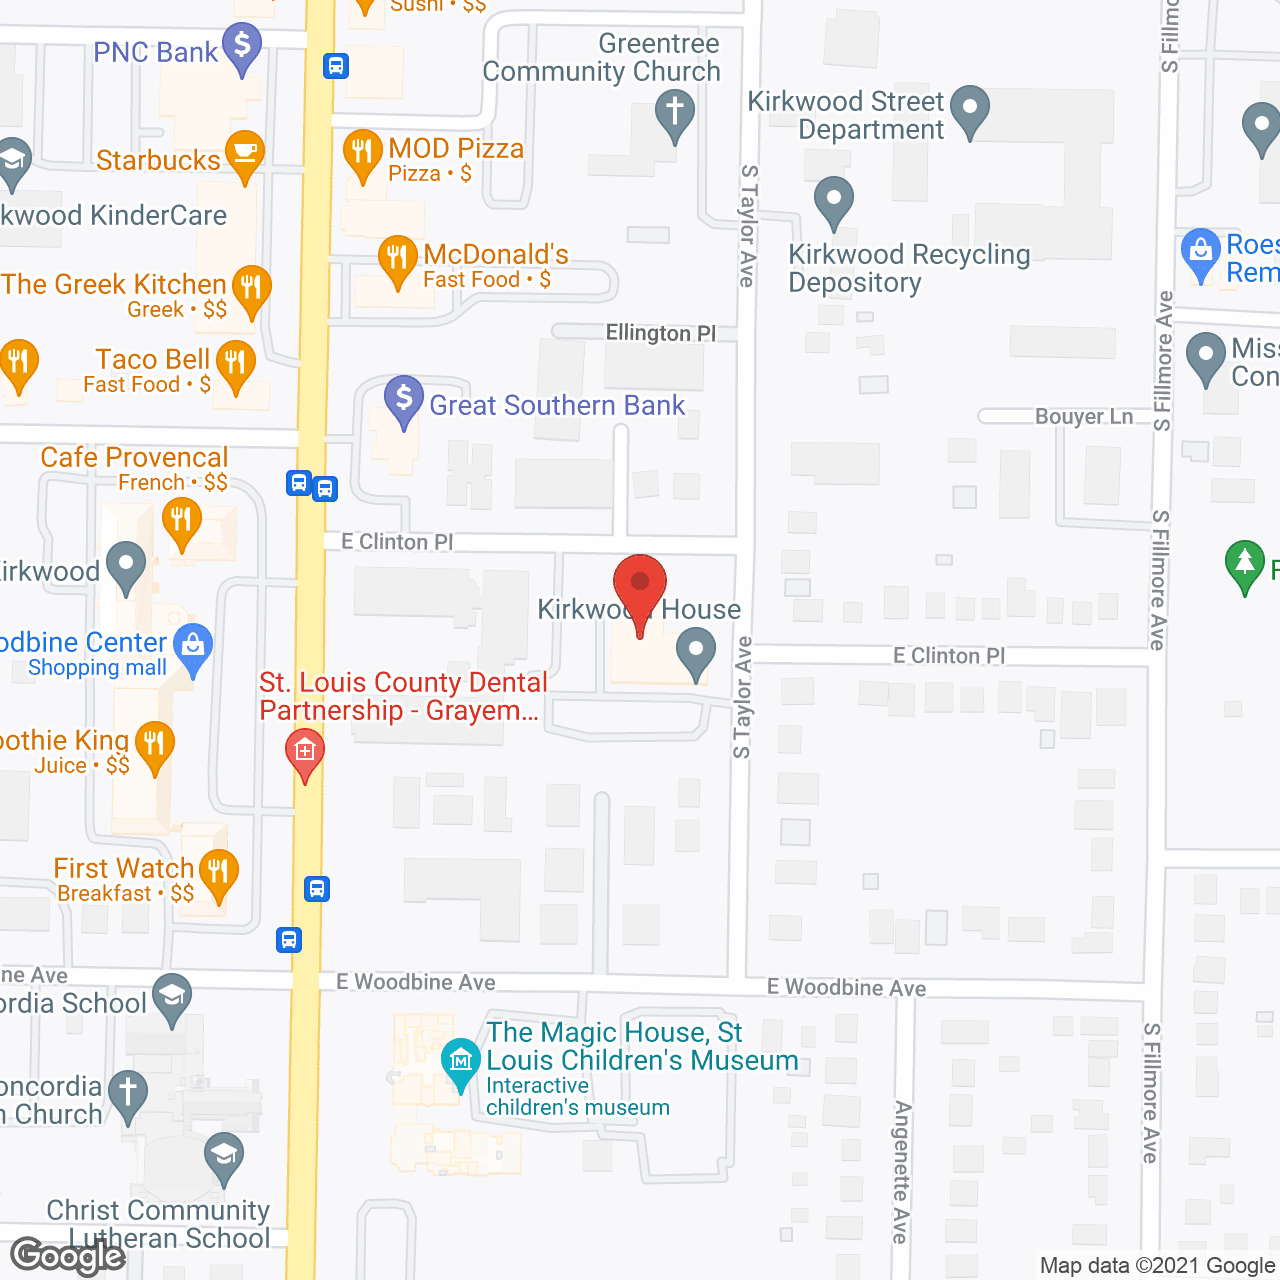 Kirkwood House in google map